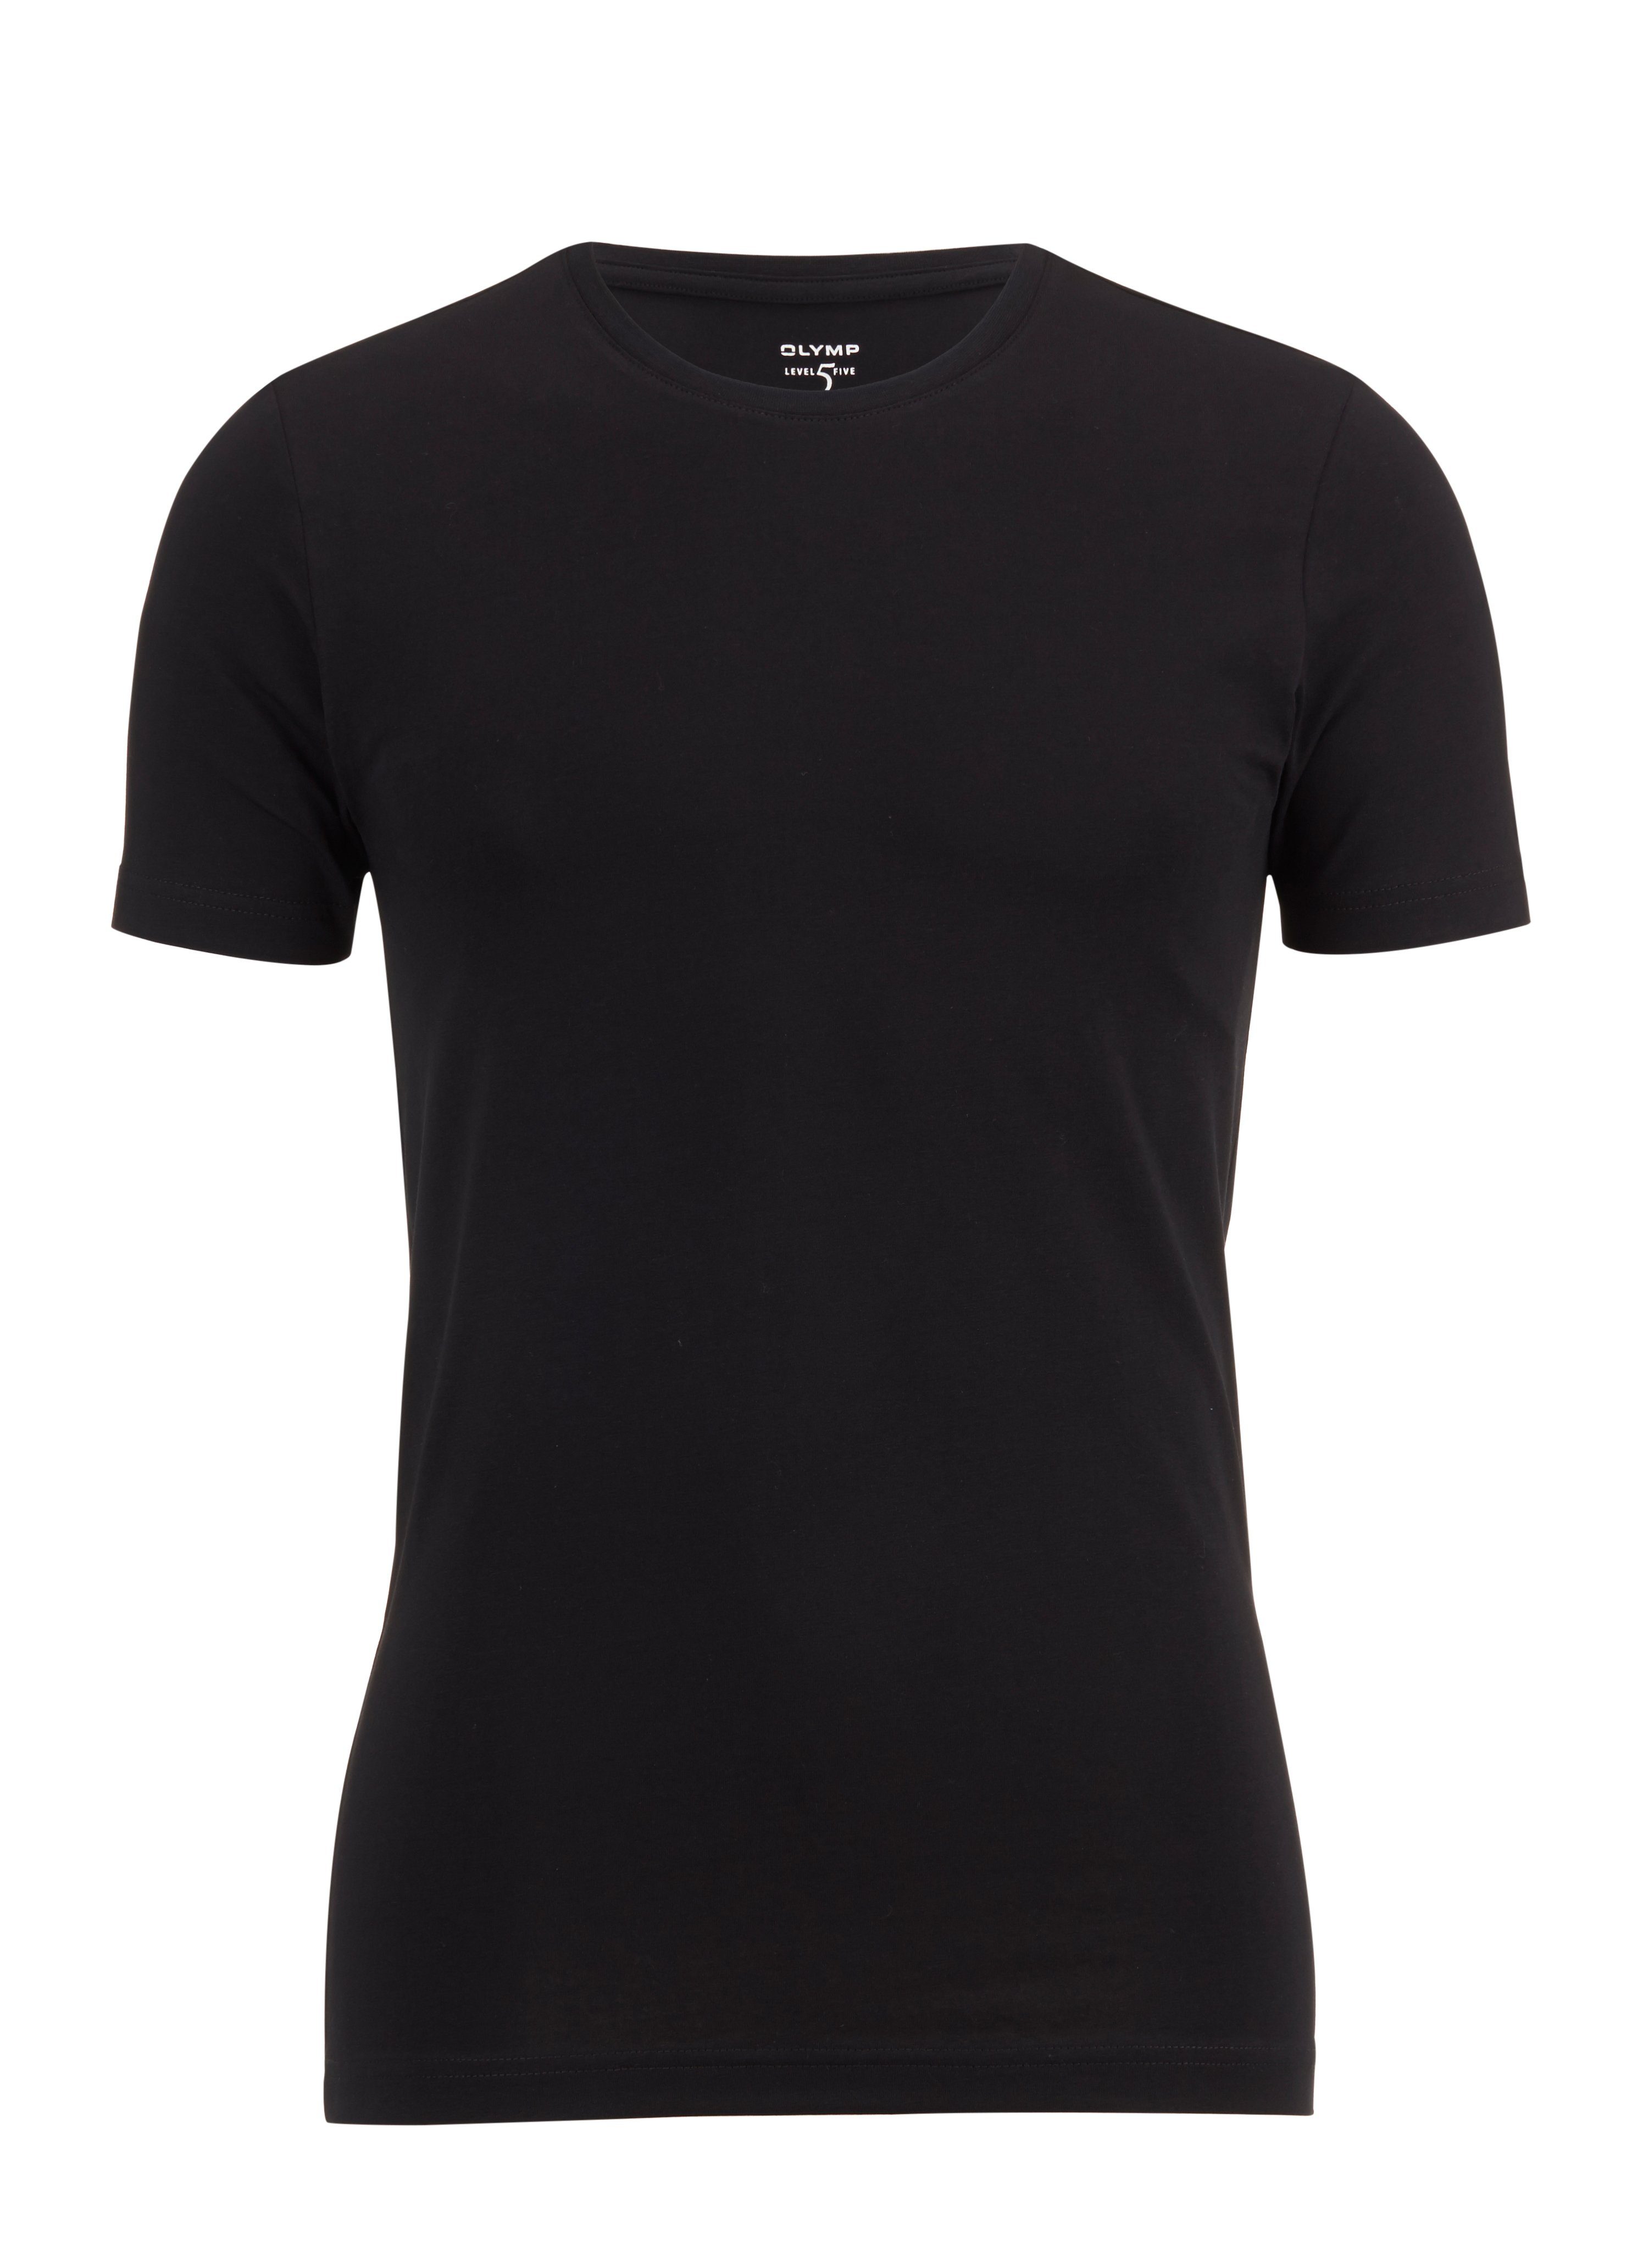 OLYMP schwarz T-Shirt body 5 Level fit